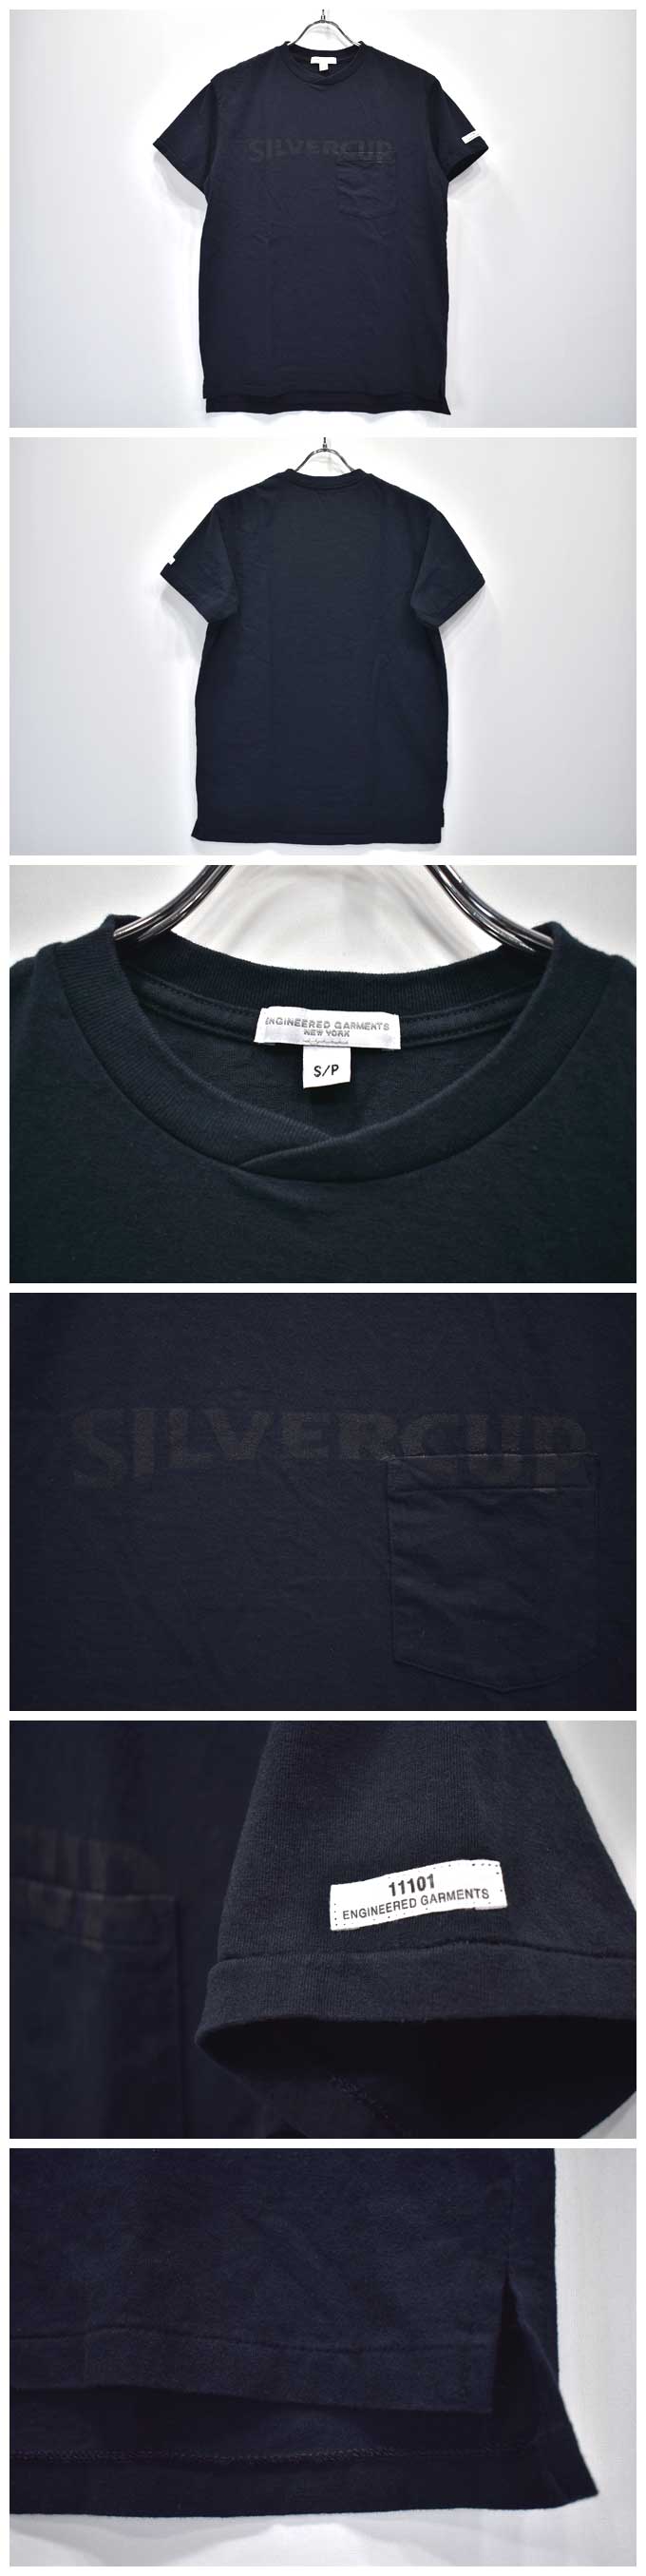 ENGINEERED GARMENTS Print Cross Crew Neck T-Shirt (Silver Cup)